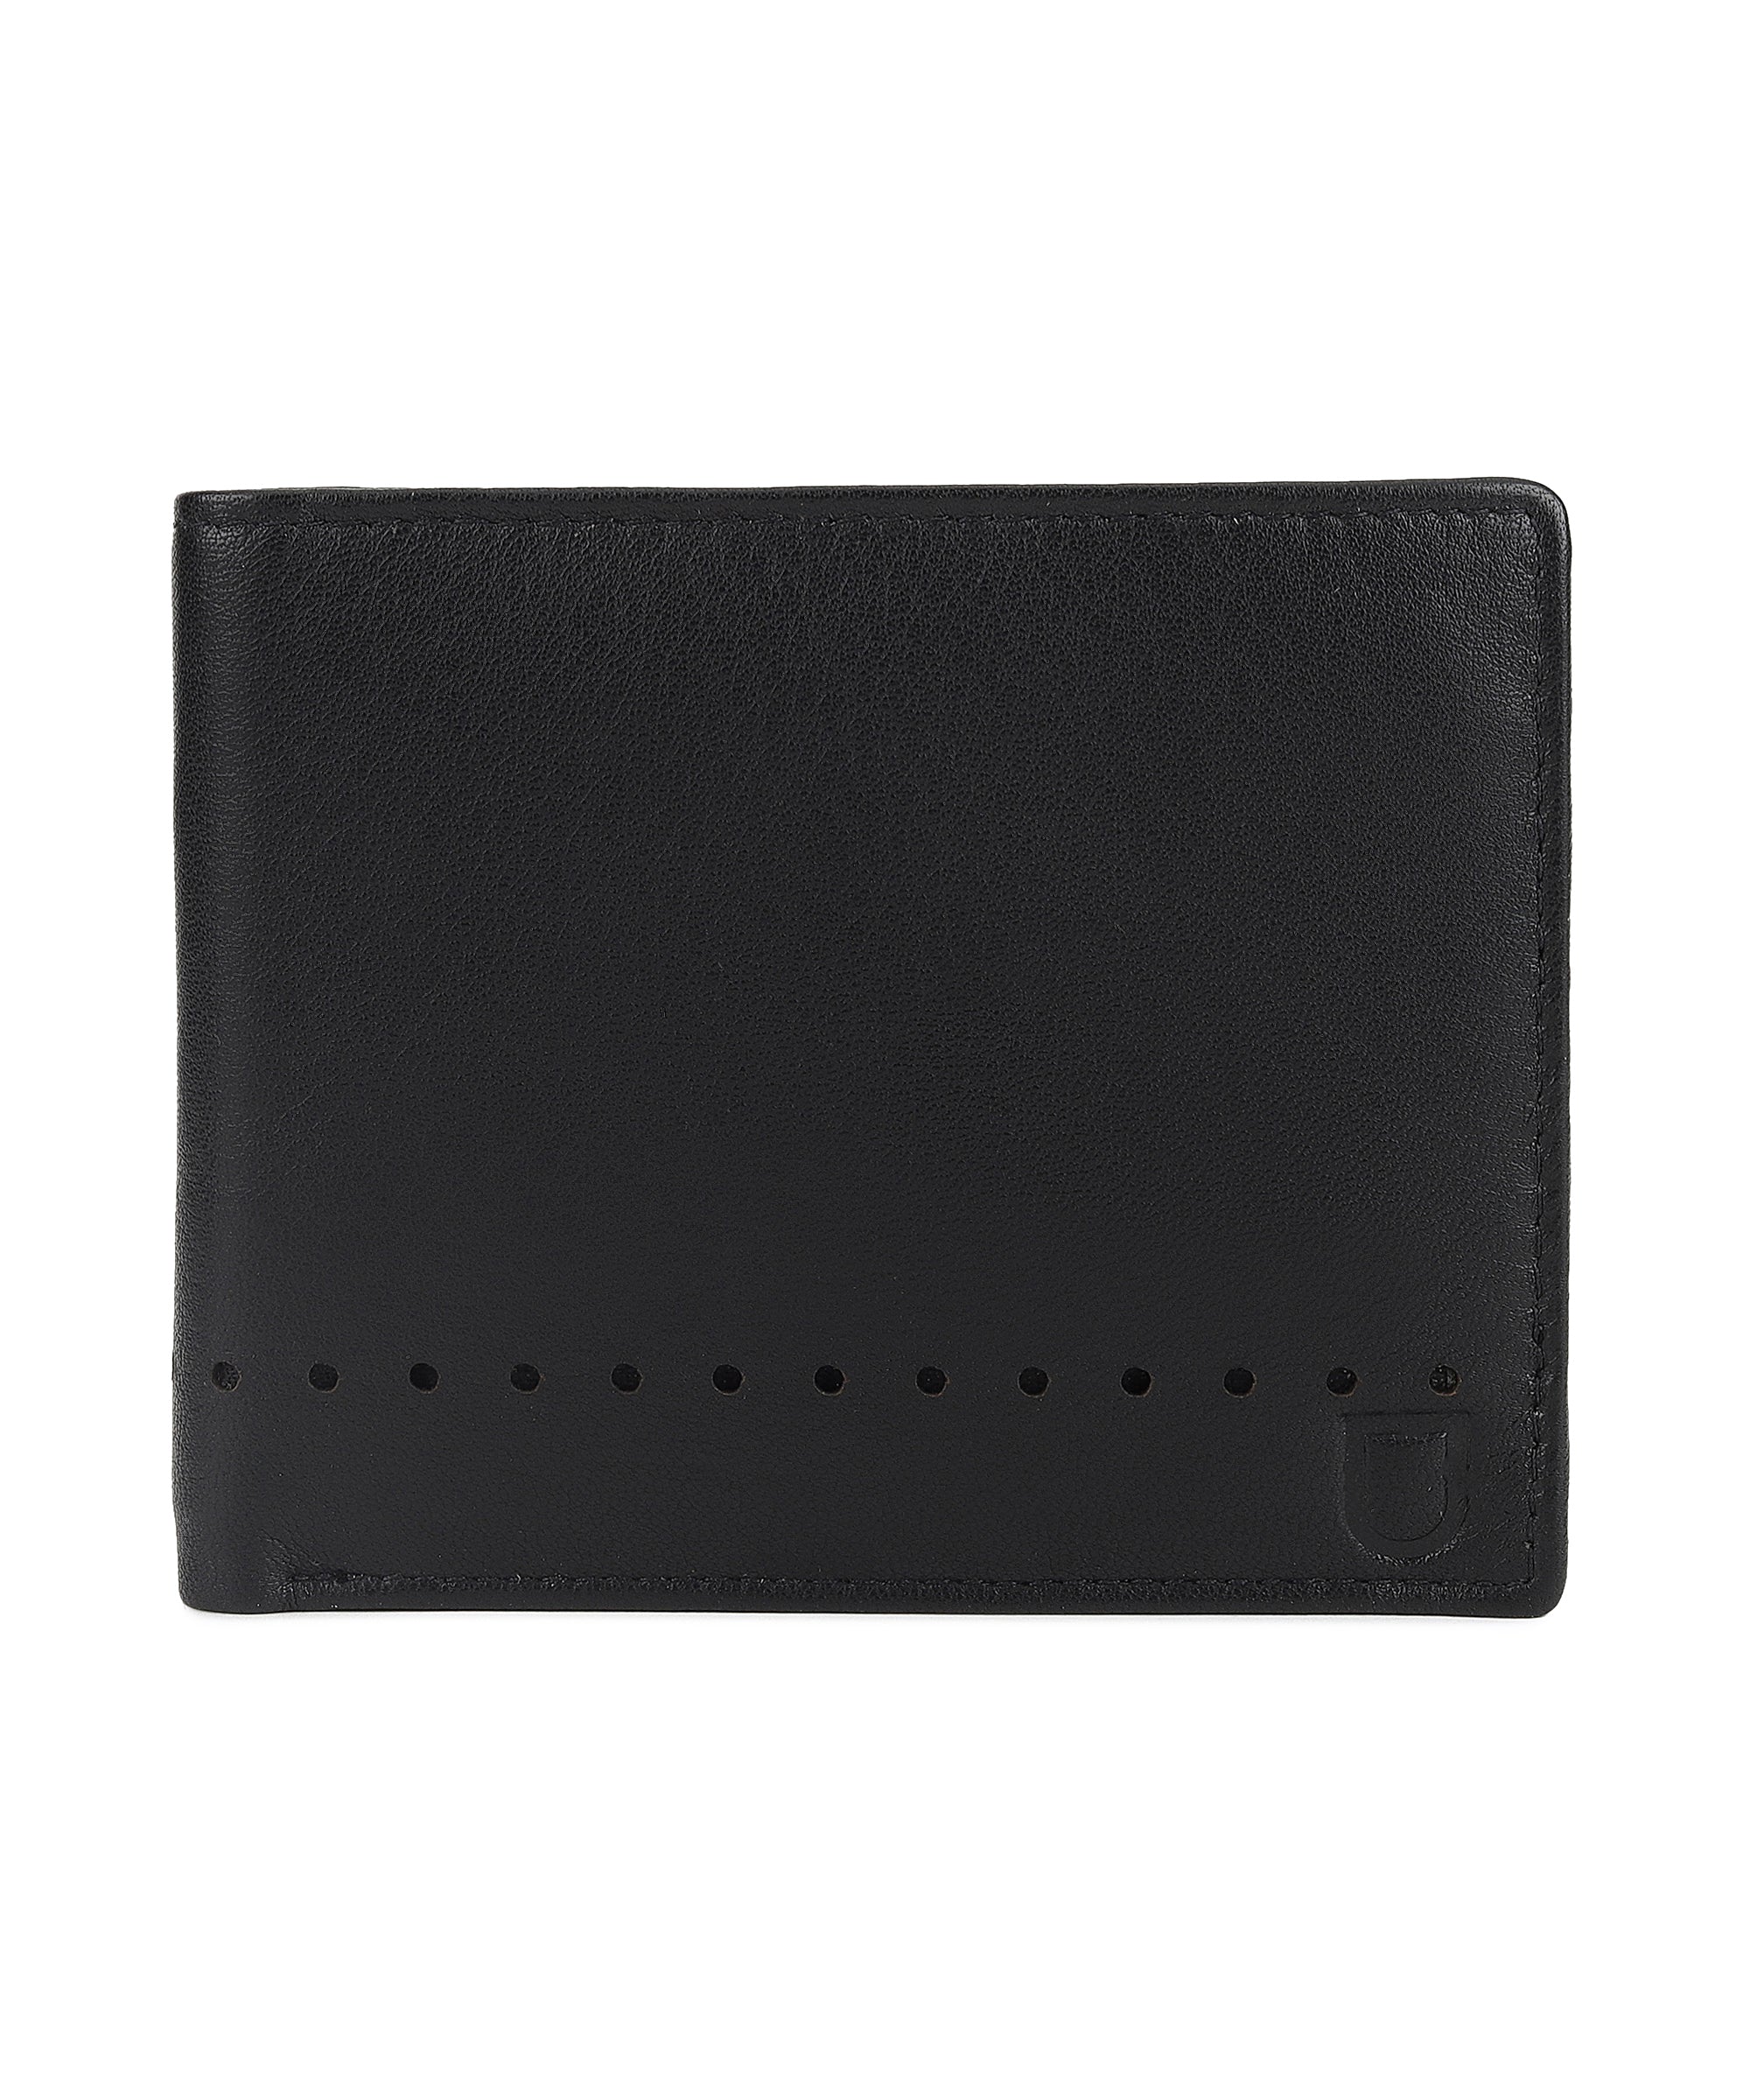 Urbano Fashion Men's Casual, Formal Black Genuine Leather Wallet-3 Card Slots